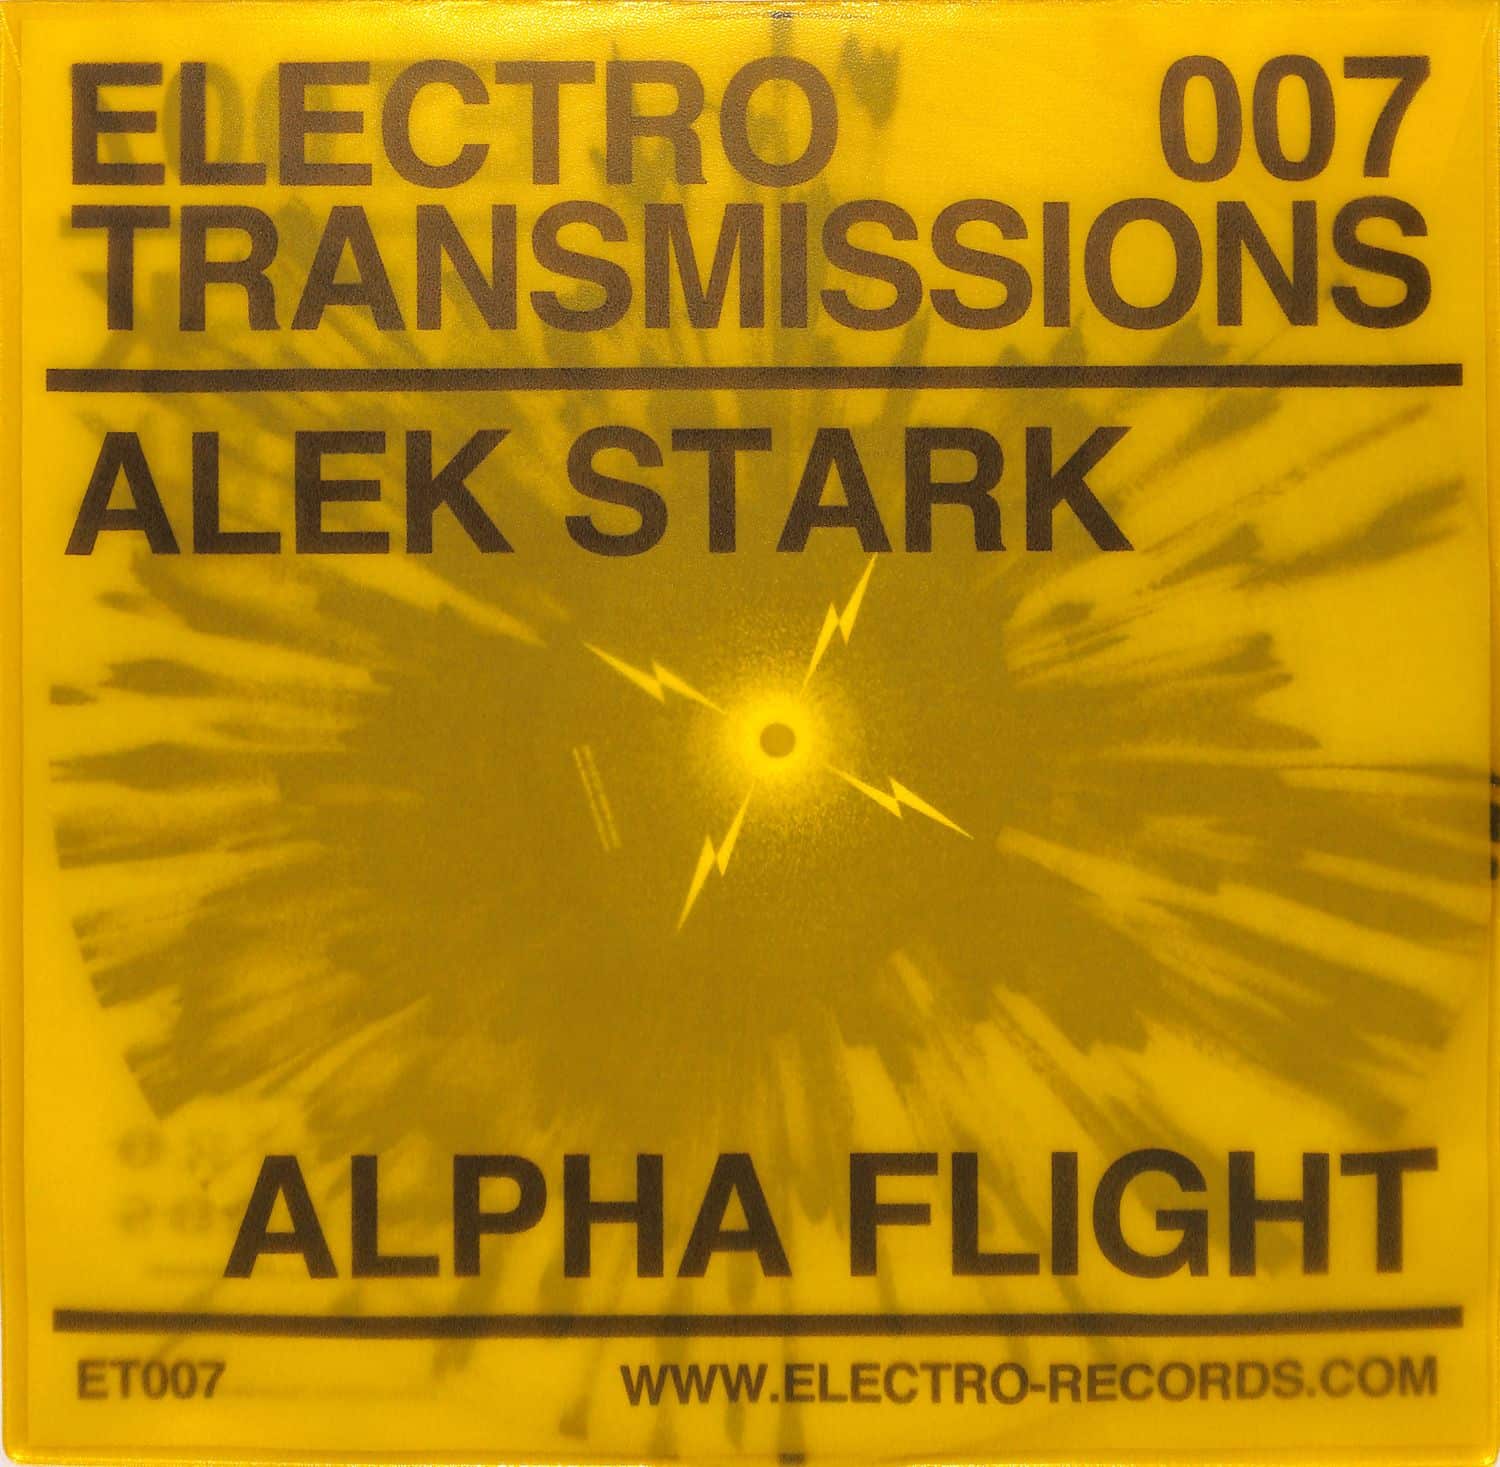 Alek Stark - ELECTRO TRANSMISSIONS 007 ALPHA FLIGHT EP